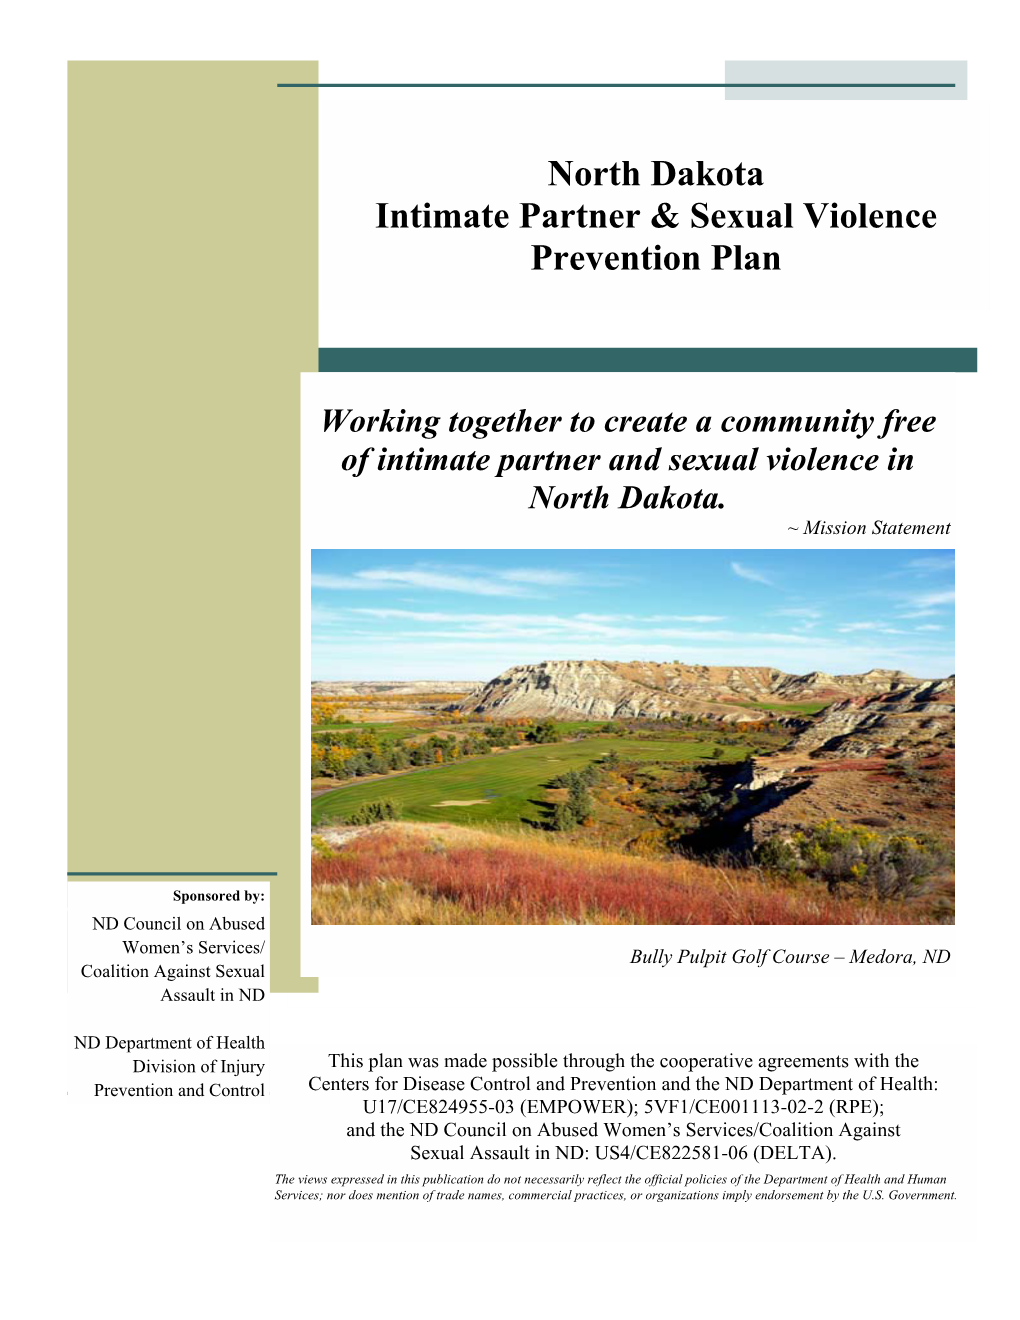 North Dakota Intimate Partner & Sexual Violence Prevention Plan